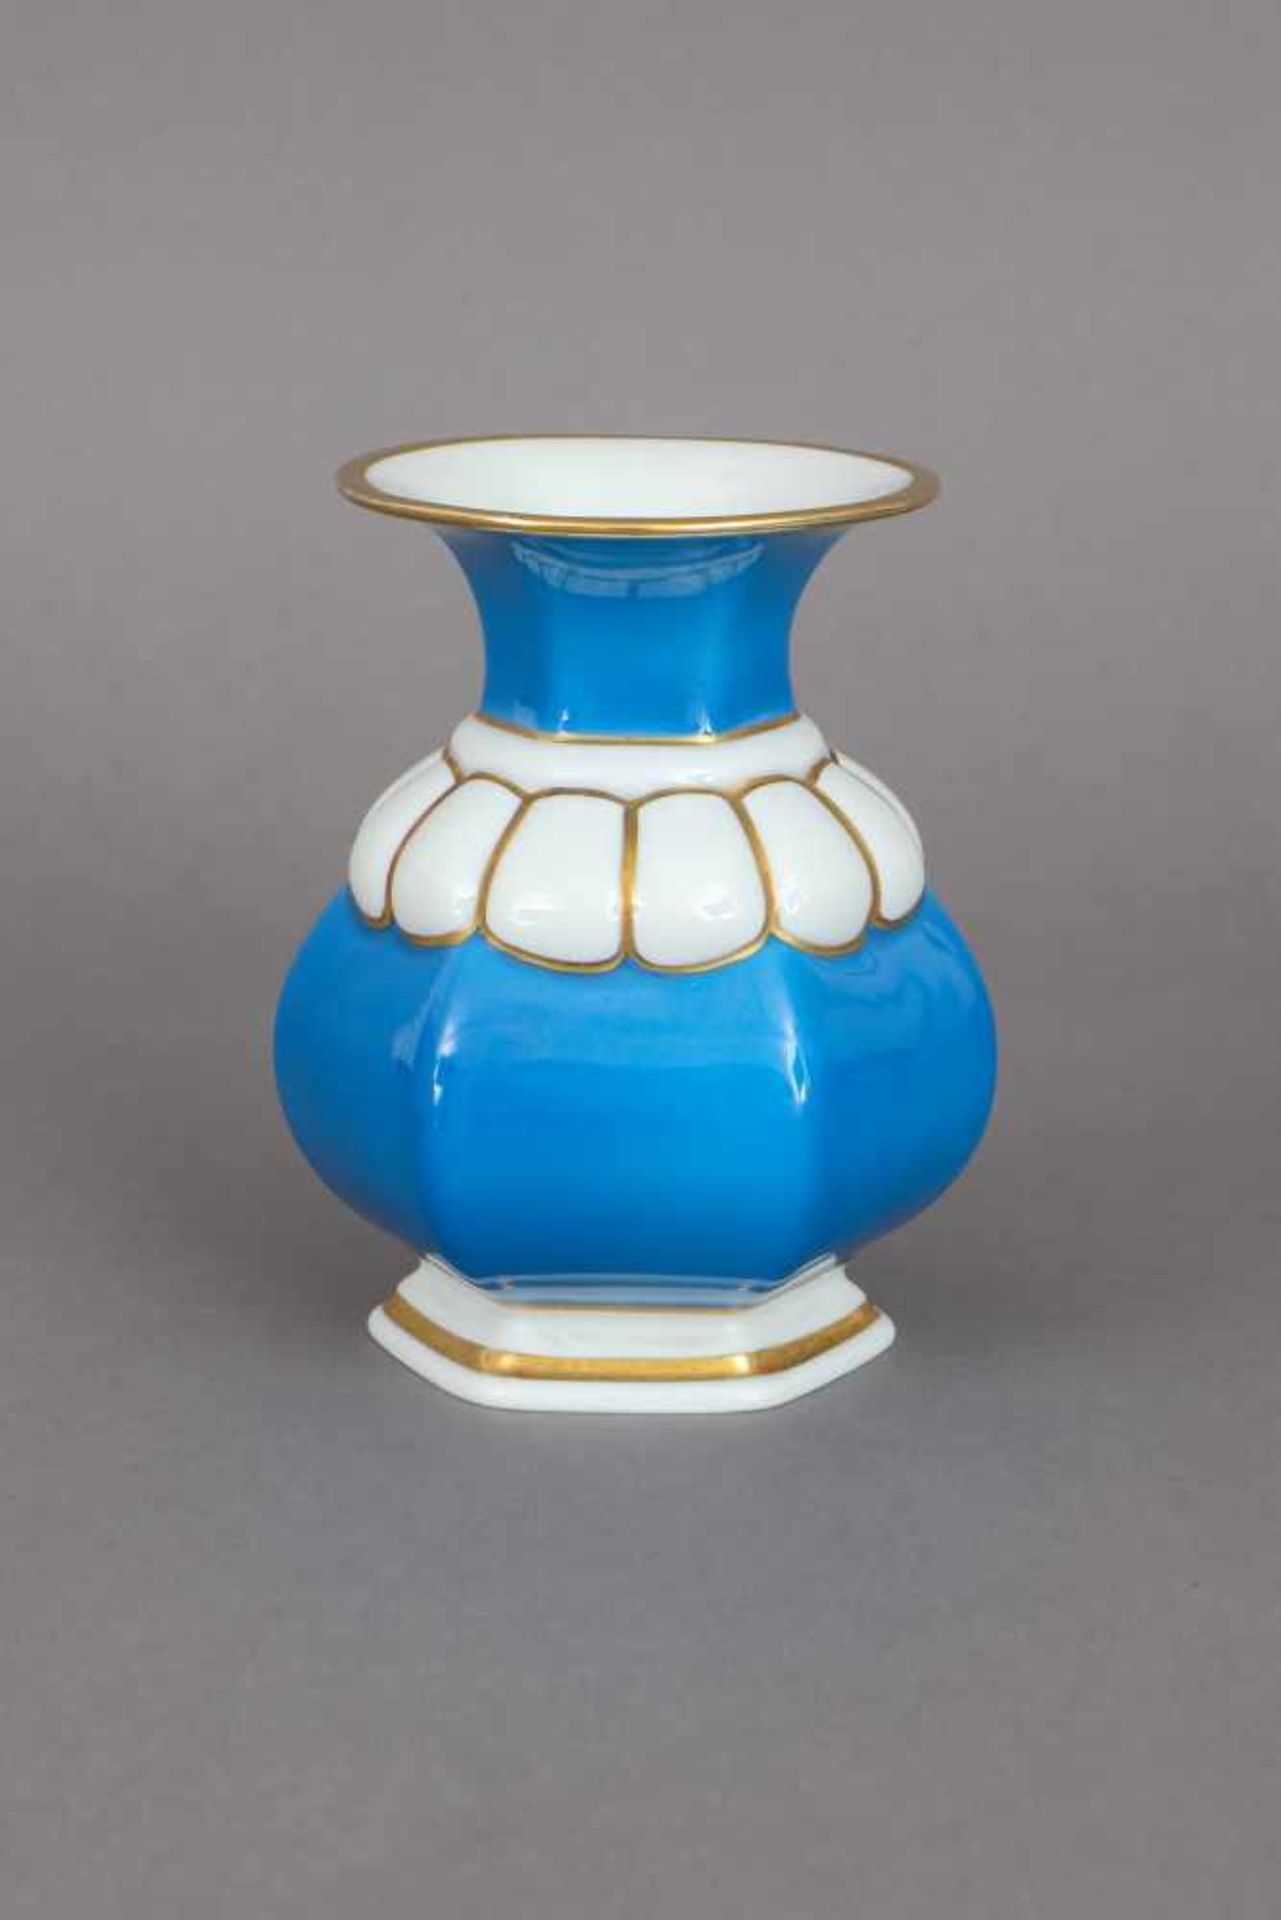 ROSENTHAL Vaseum 1928, Entwurf PHILIPP ROSENTHAL, Modell-Nr. 255-1, polygonaler Korpus auf gekehltem